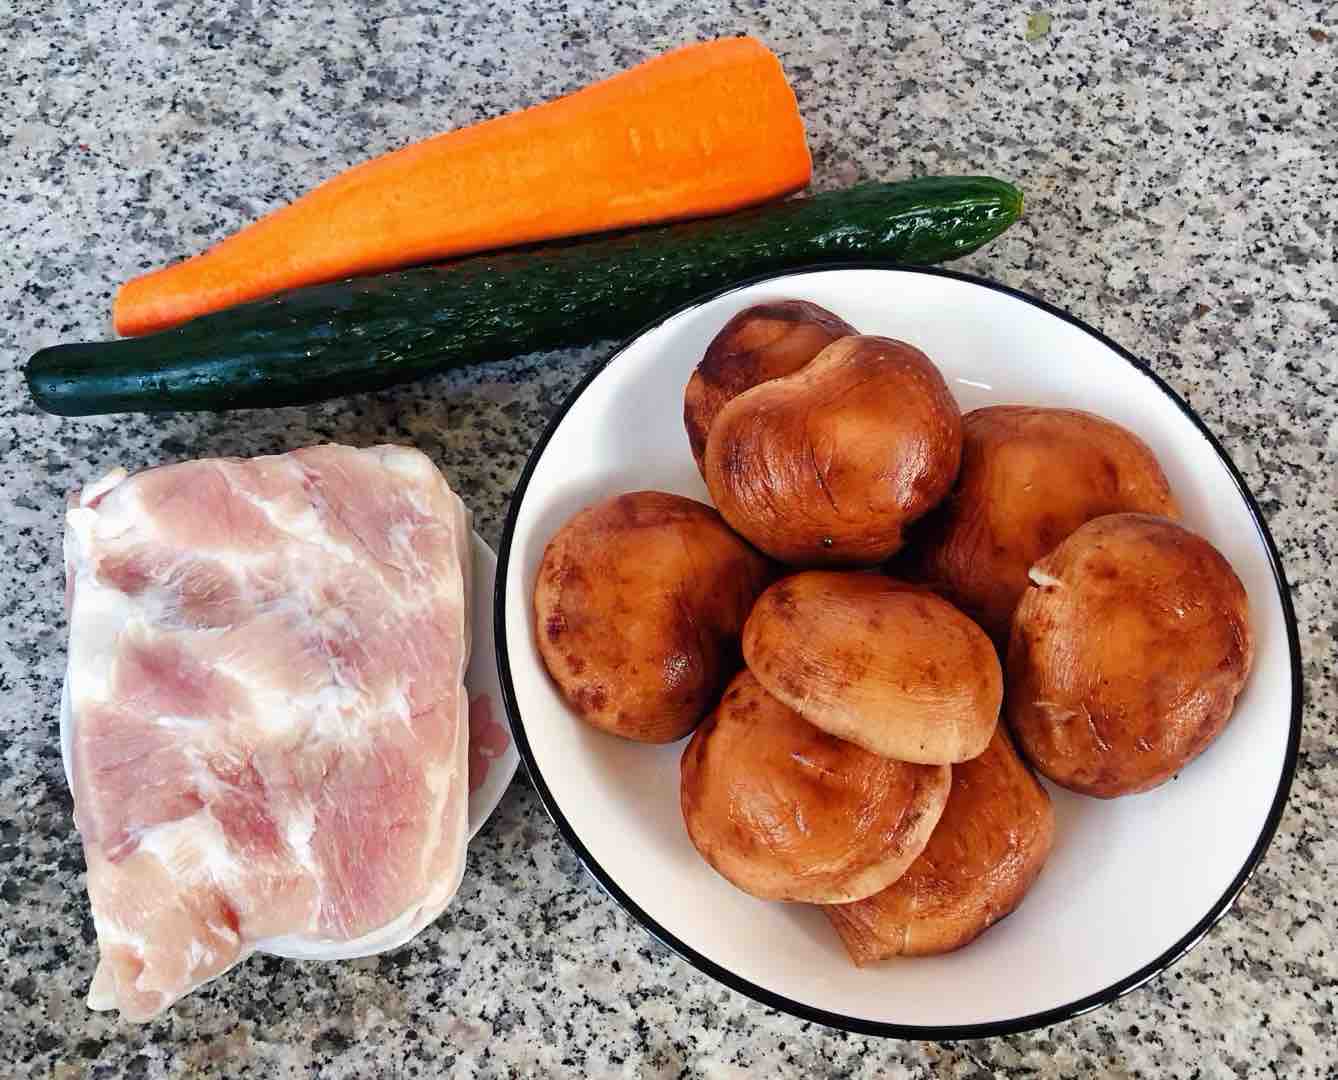 Stir-fried Pork with Mushrooms recipe